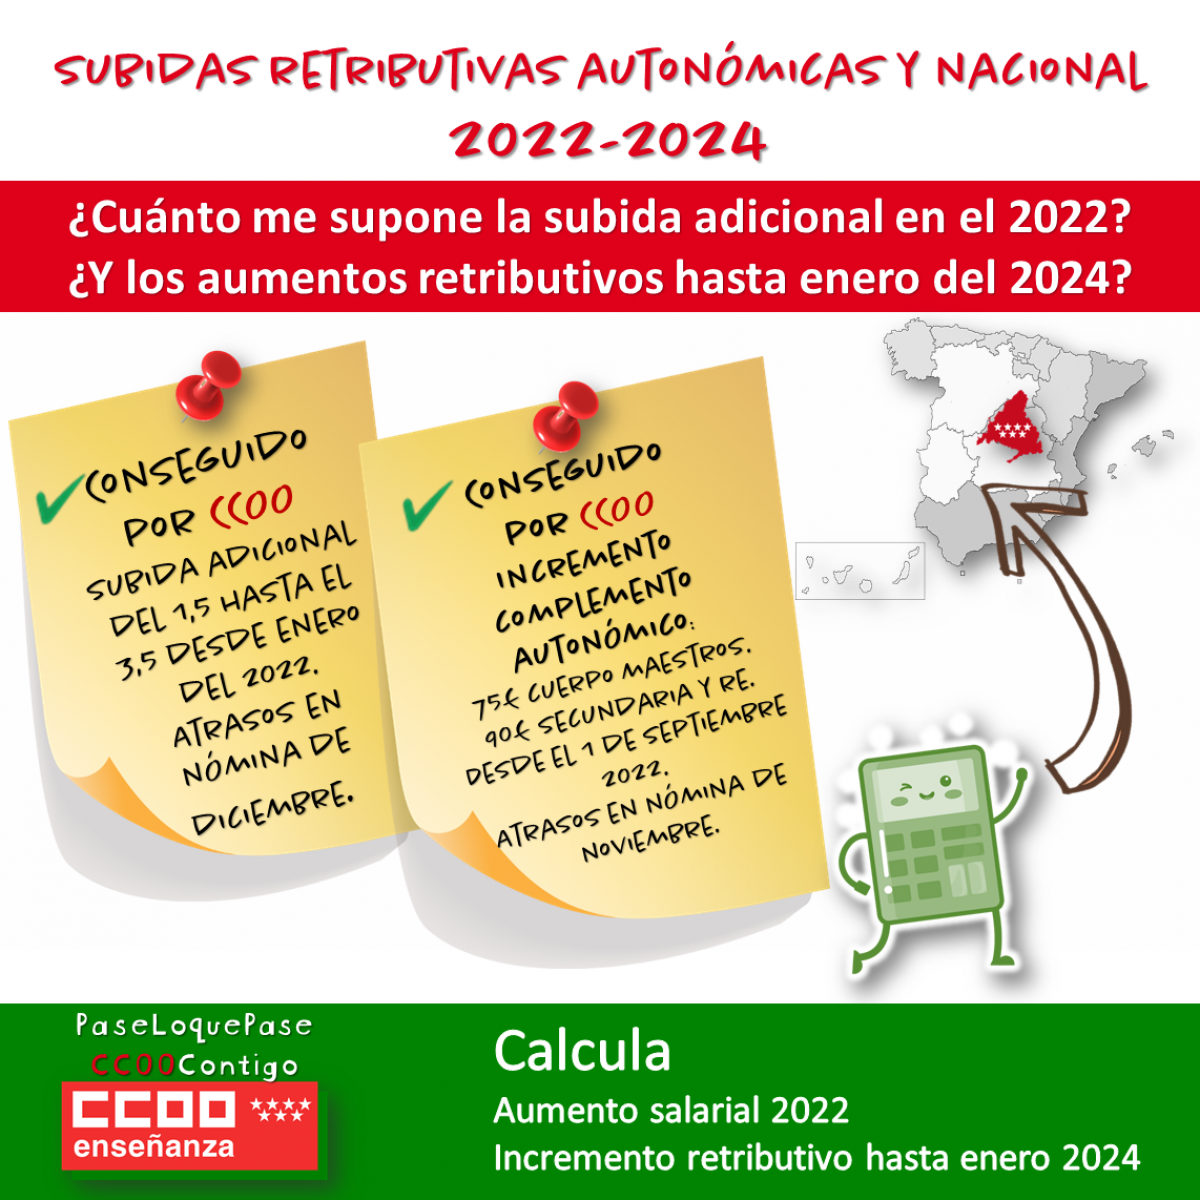 Subidas retributivas autonómicas y nacional 2022-2024 conseguido por CCOO